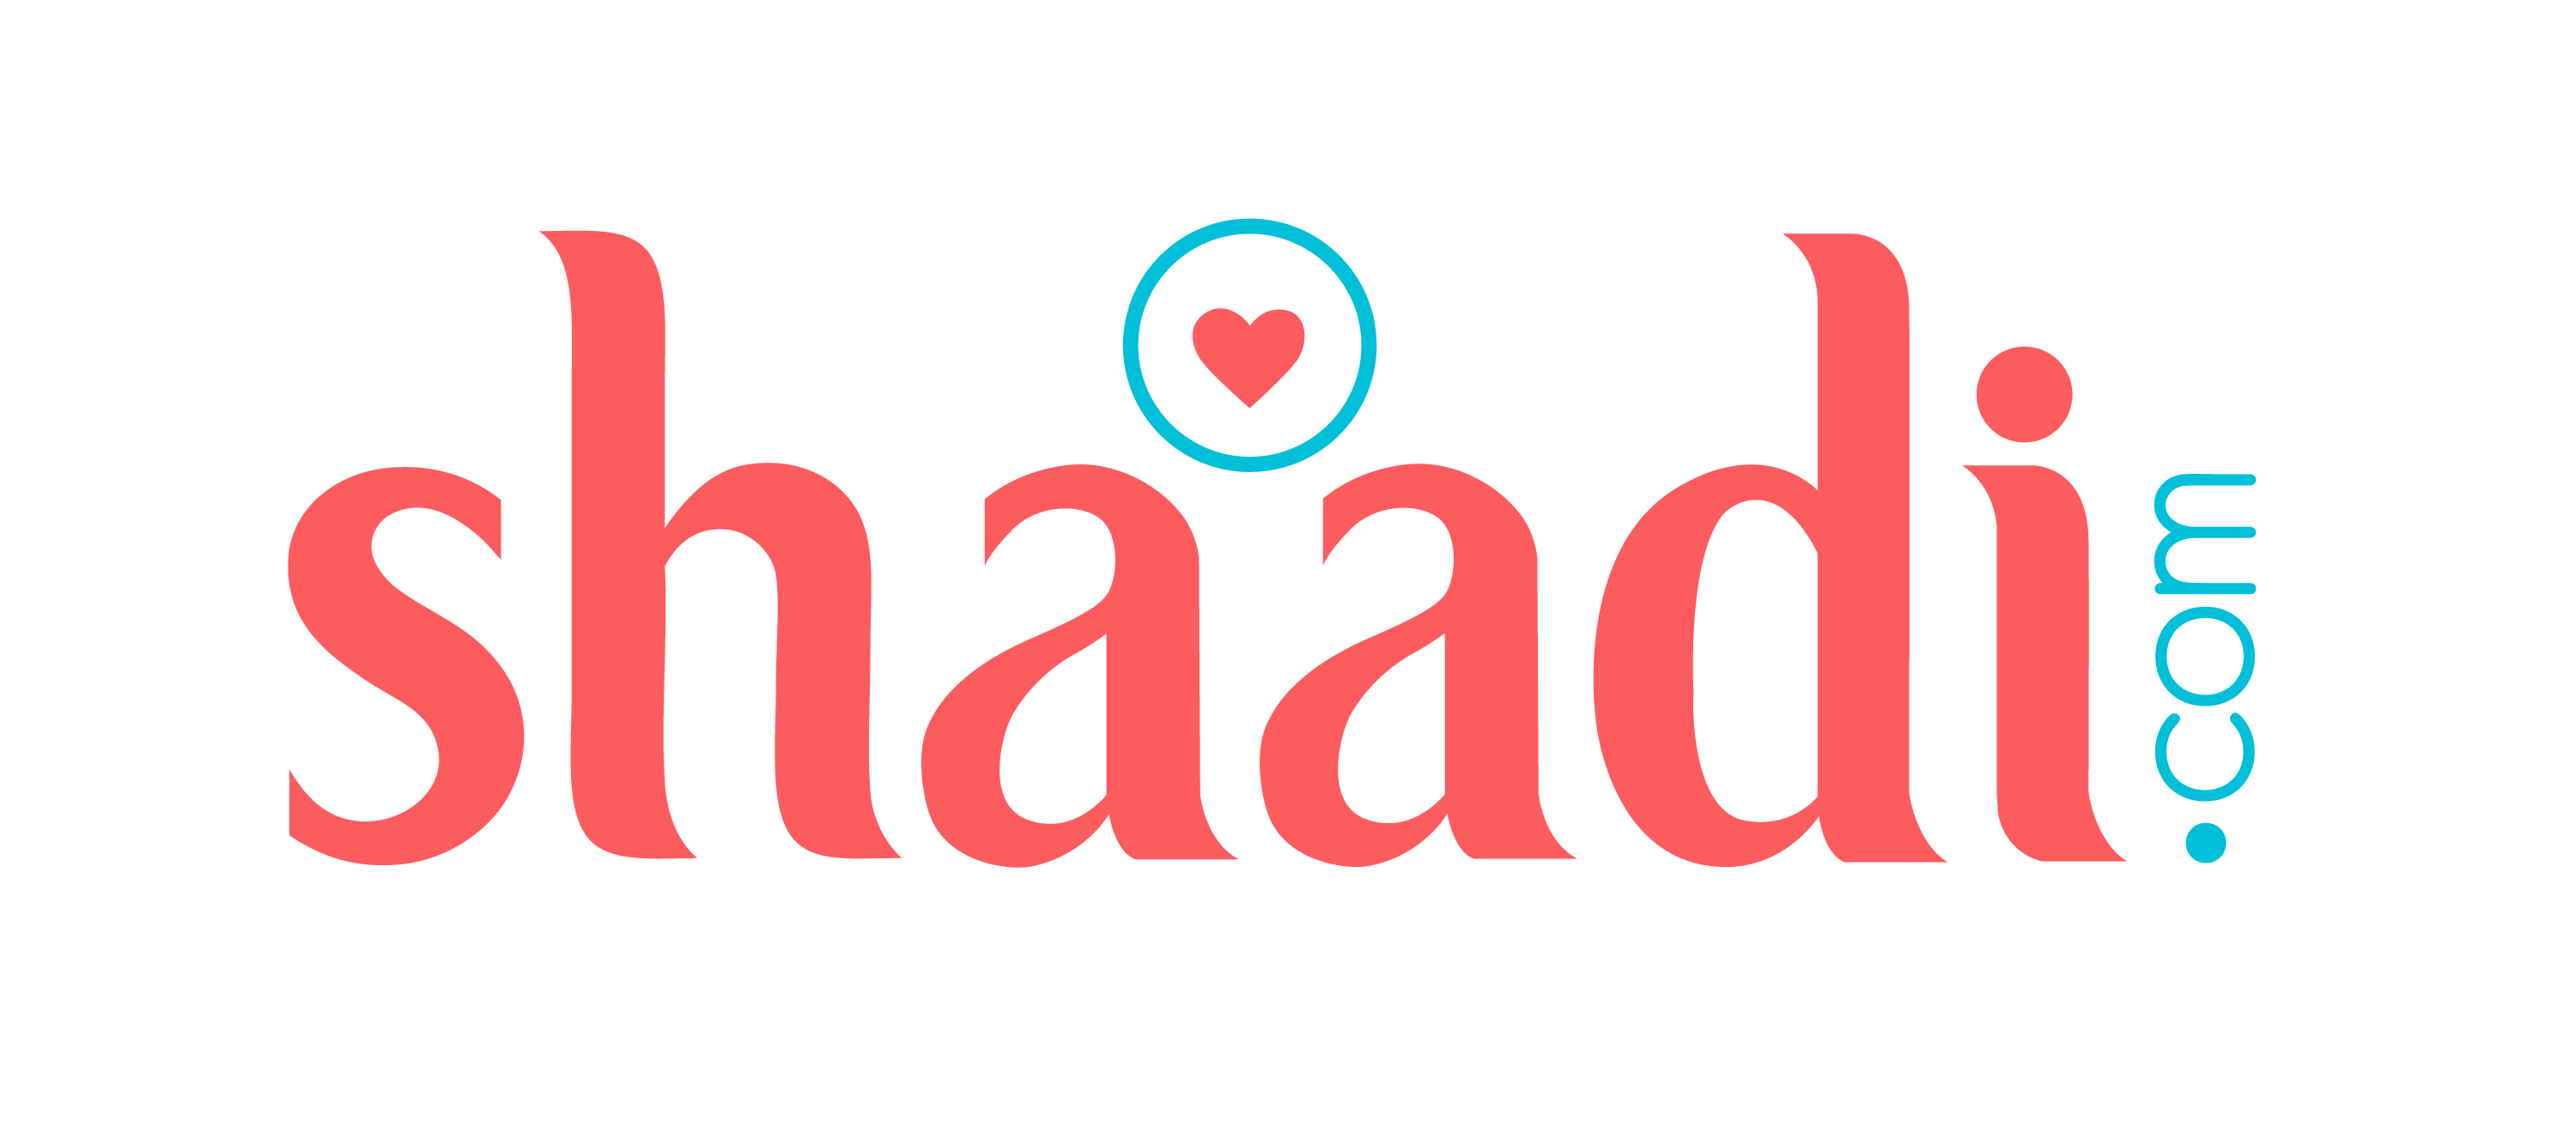 shaadi dating site